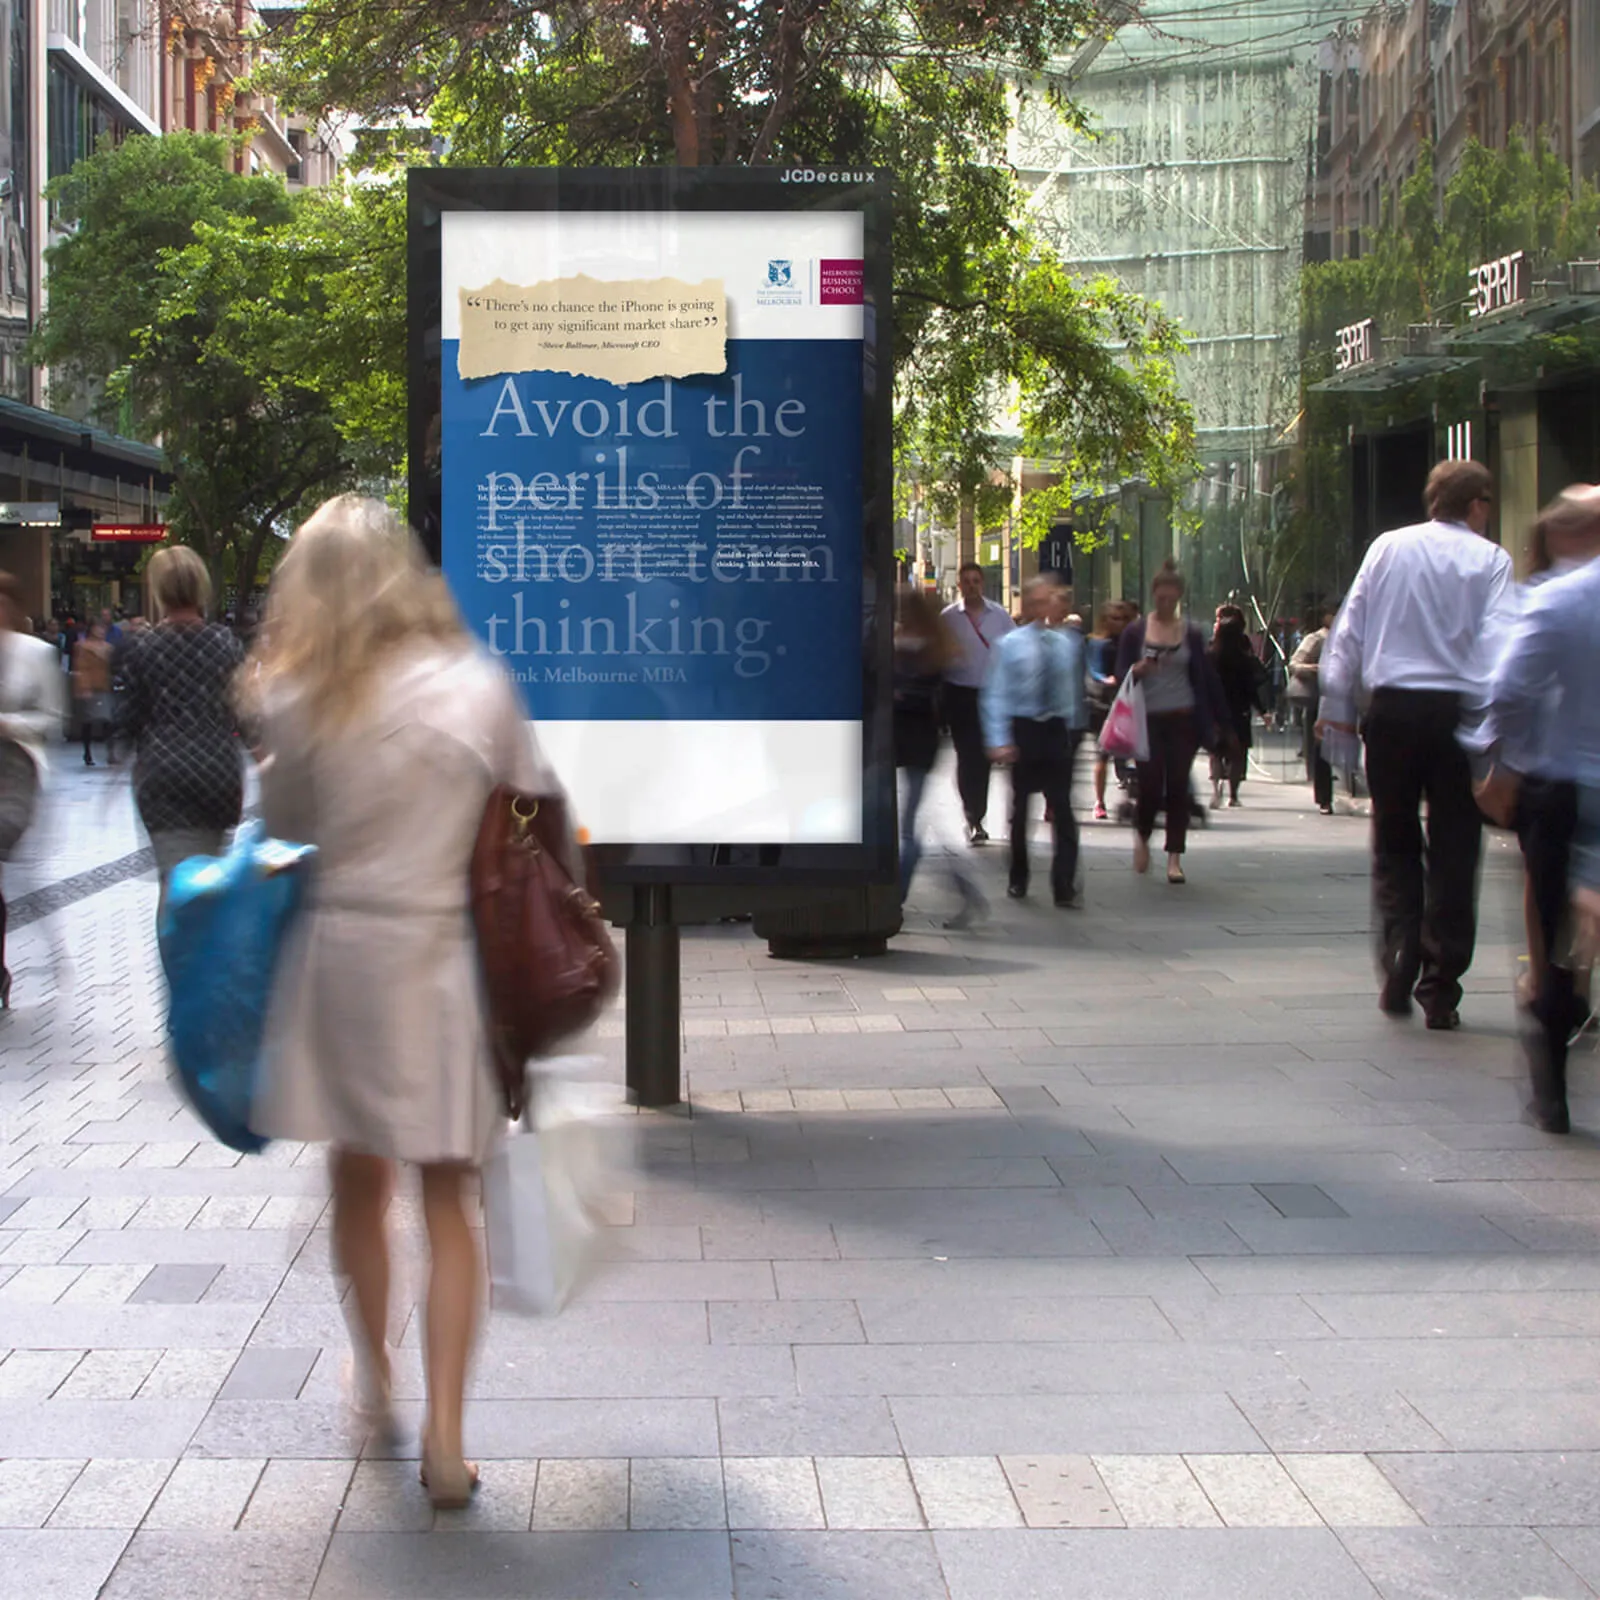 An eye-catching outdoor billboard promoting Melbourne University's MBA program